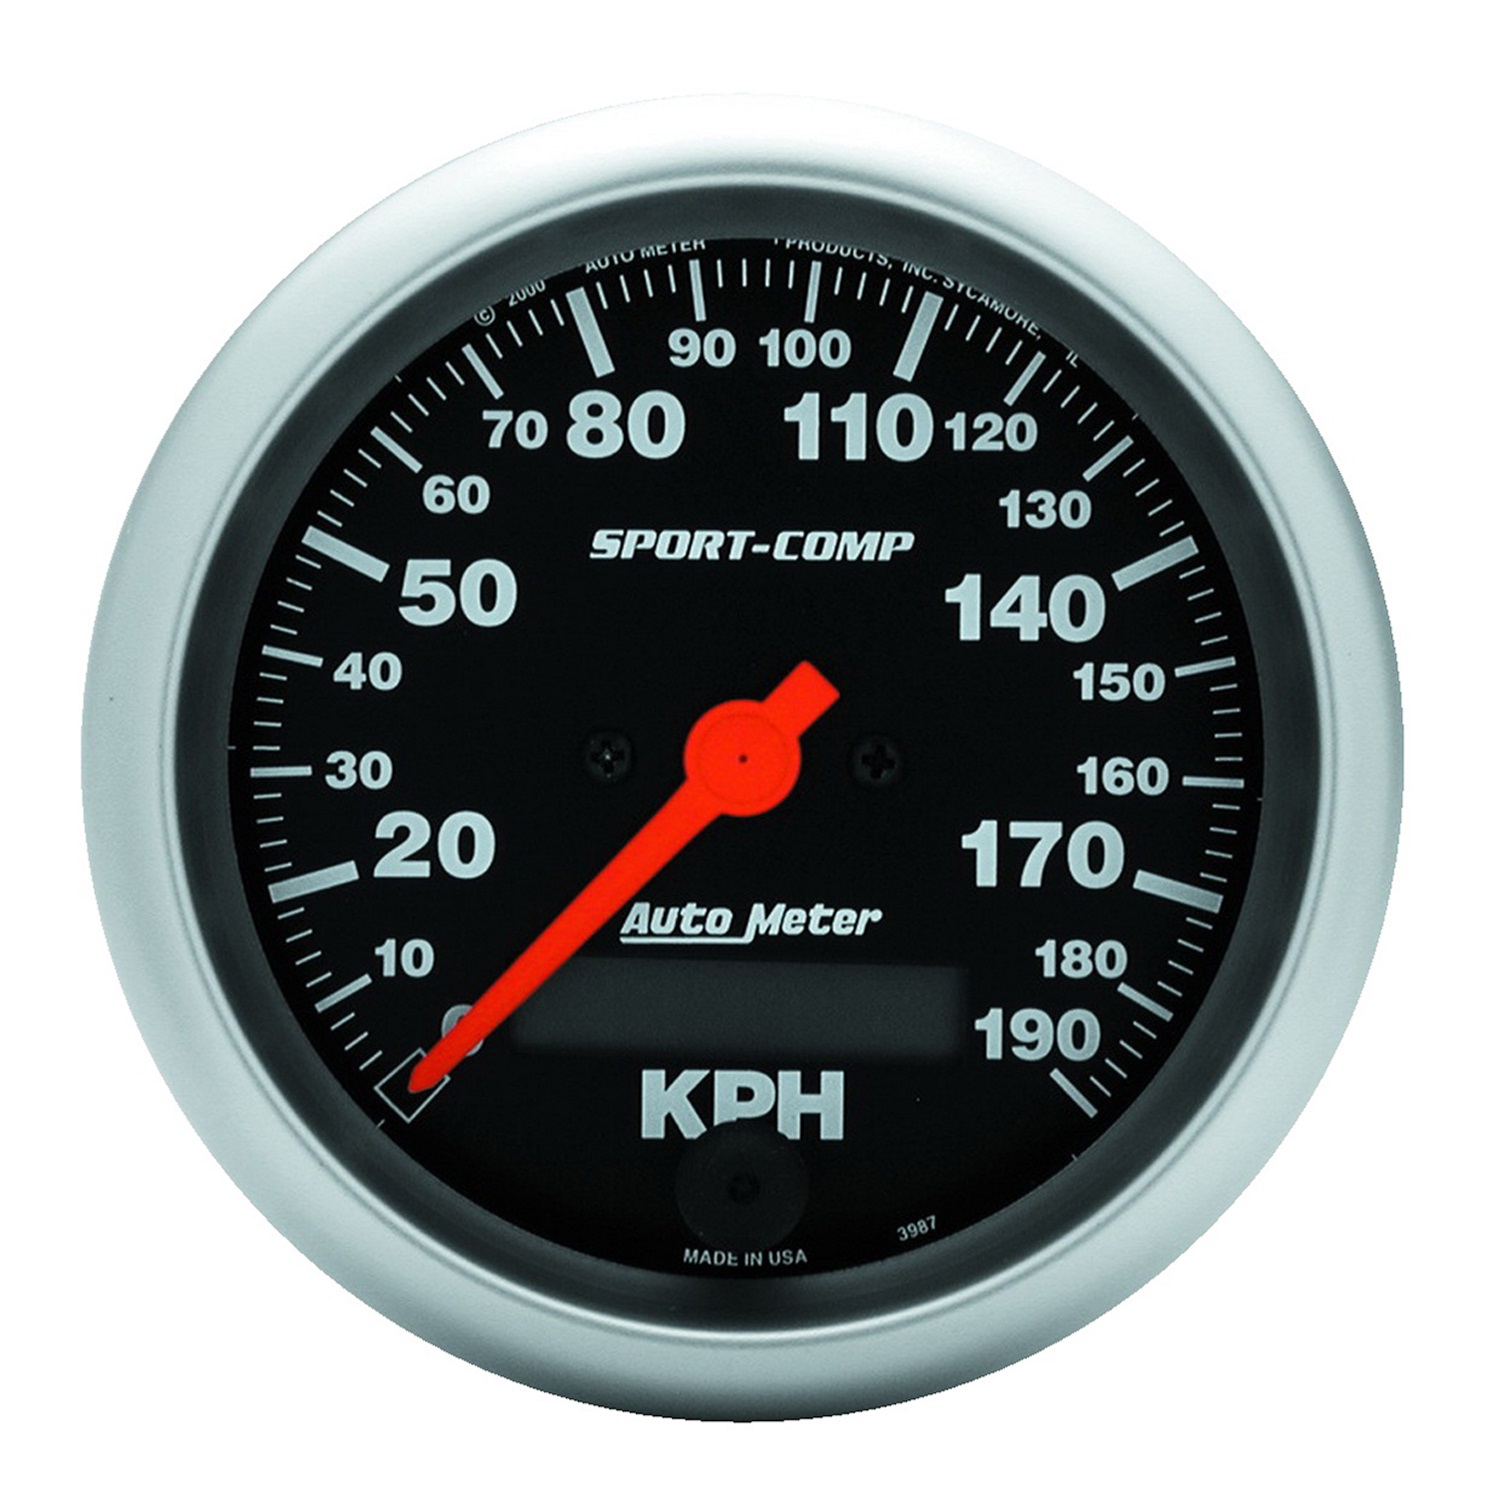 Auto Meter Auto Meter 3987-M Sport-Comp; Electric Metric Speedo